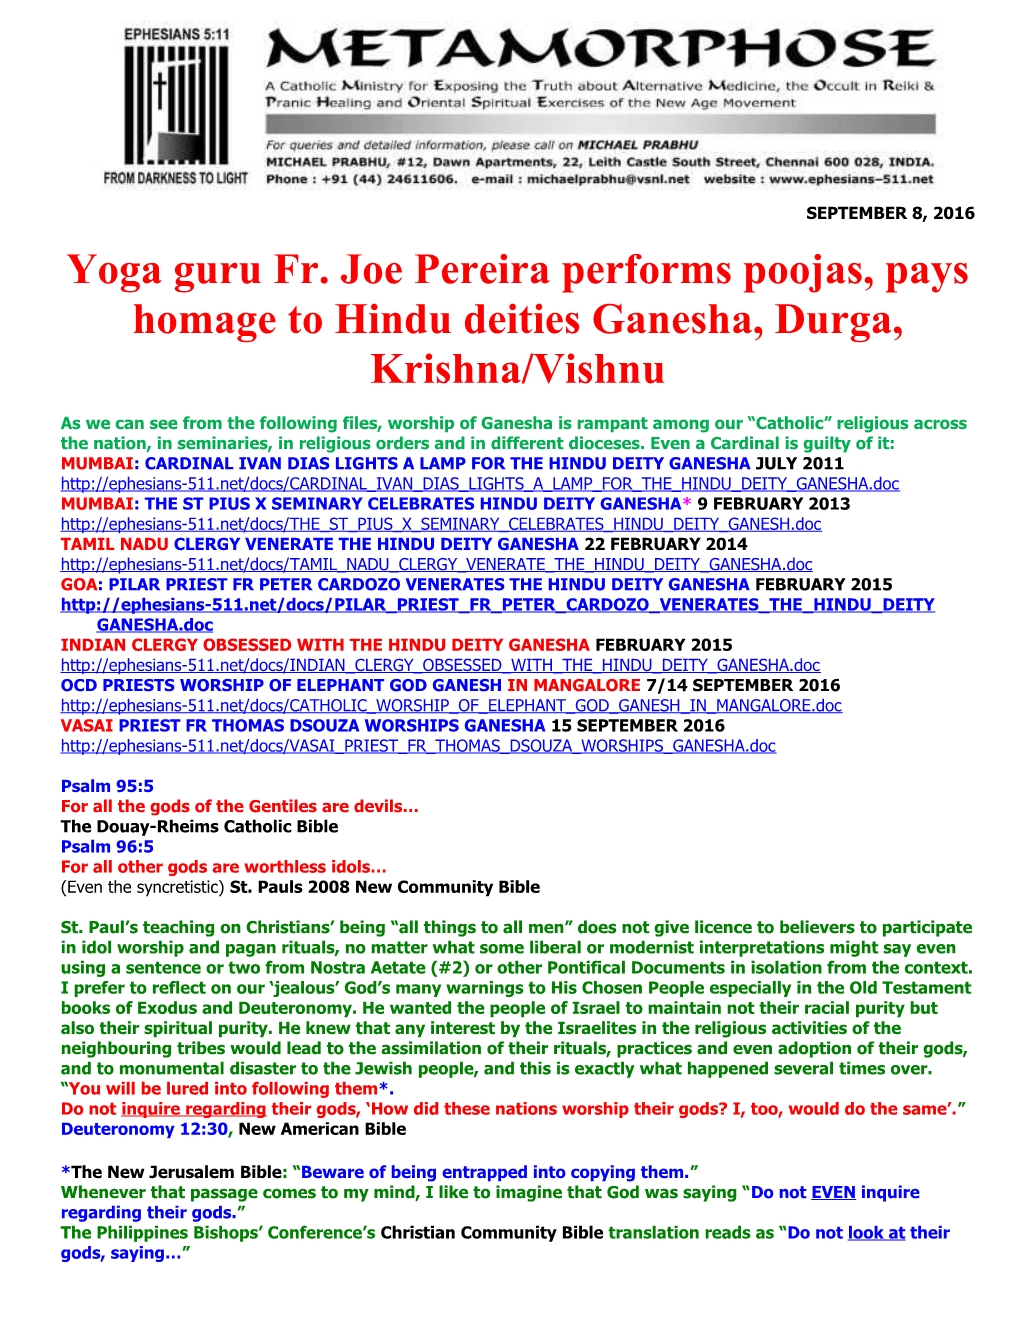 Yoga Guru Fr. Joe Pereira Performs Poojas, Pays Homage to Hindu Deities Ganesha, Durga